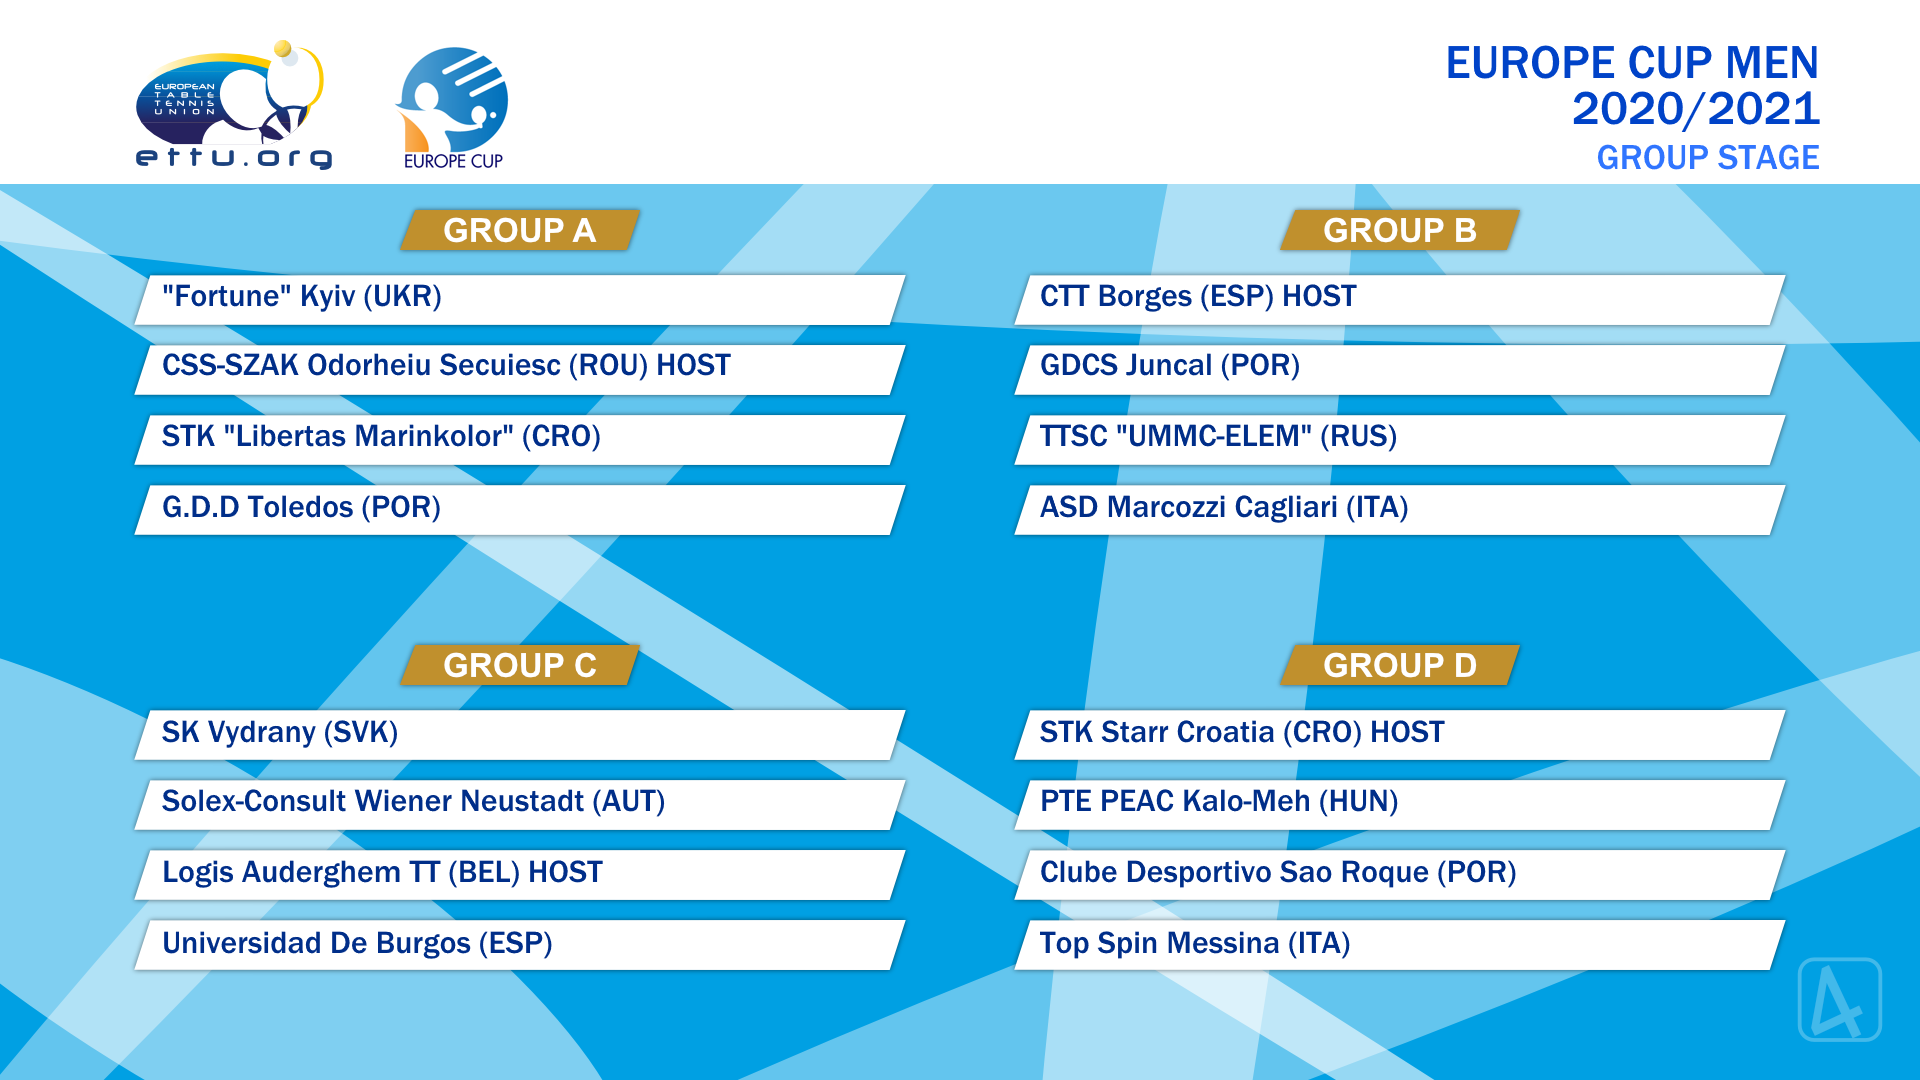 Europe Cup maschile fase a gironi 2020 2021